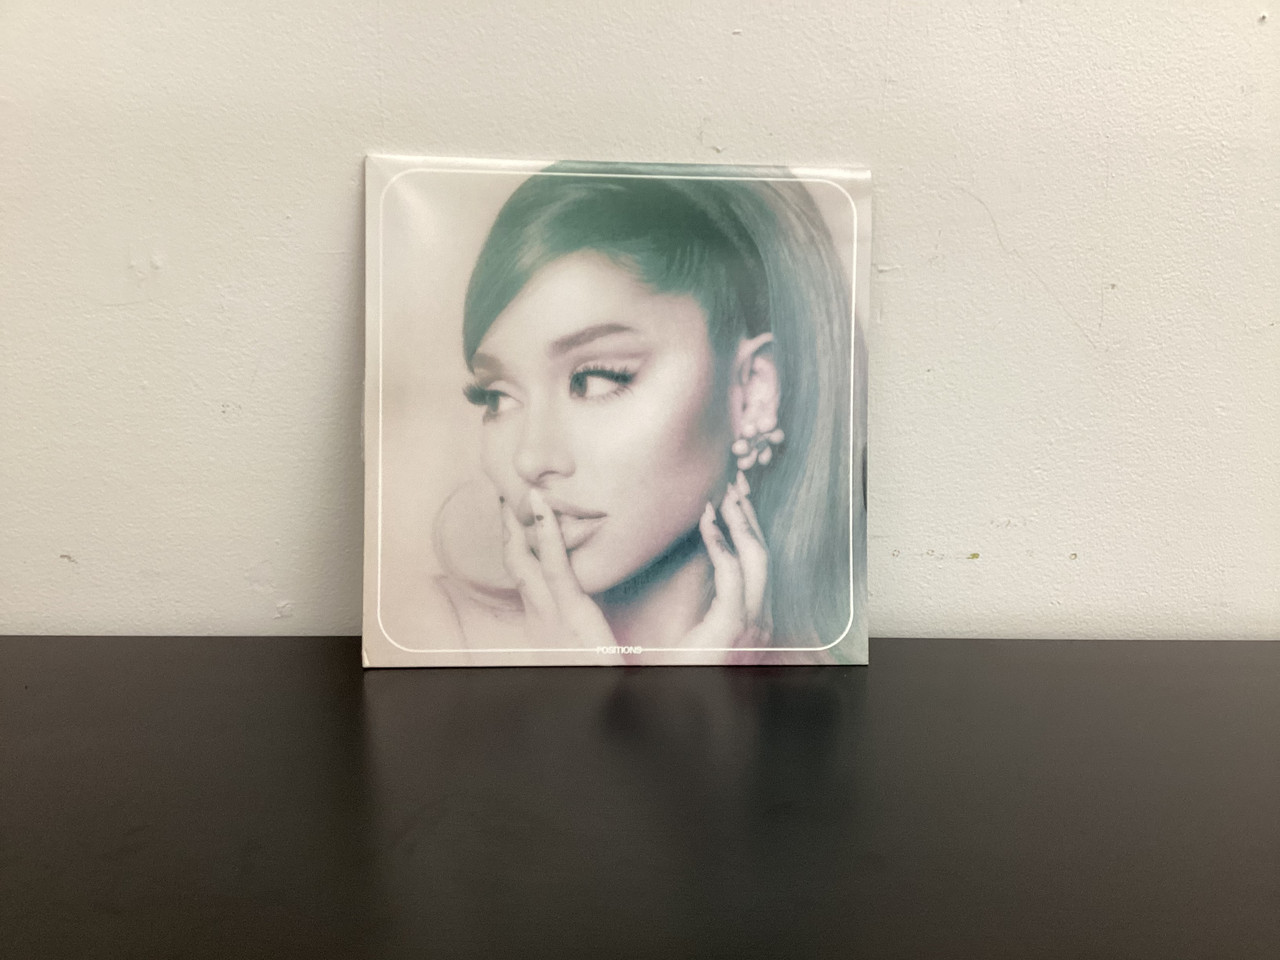 Ariana Grande - Positions (Exclusive Glow In The Dark Green Vinyl LP) -   Music